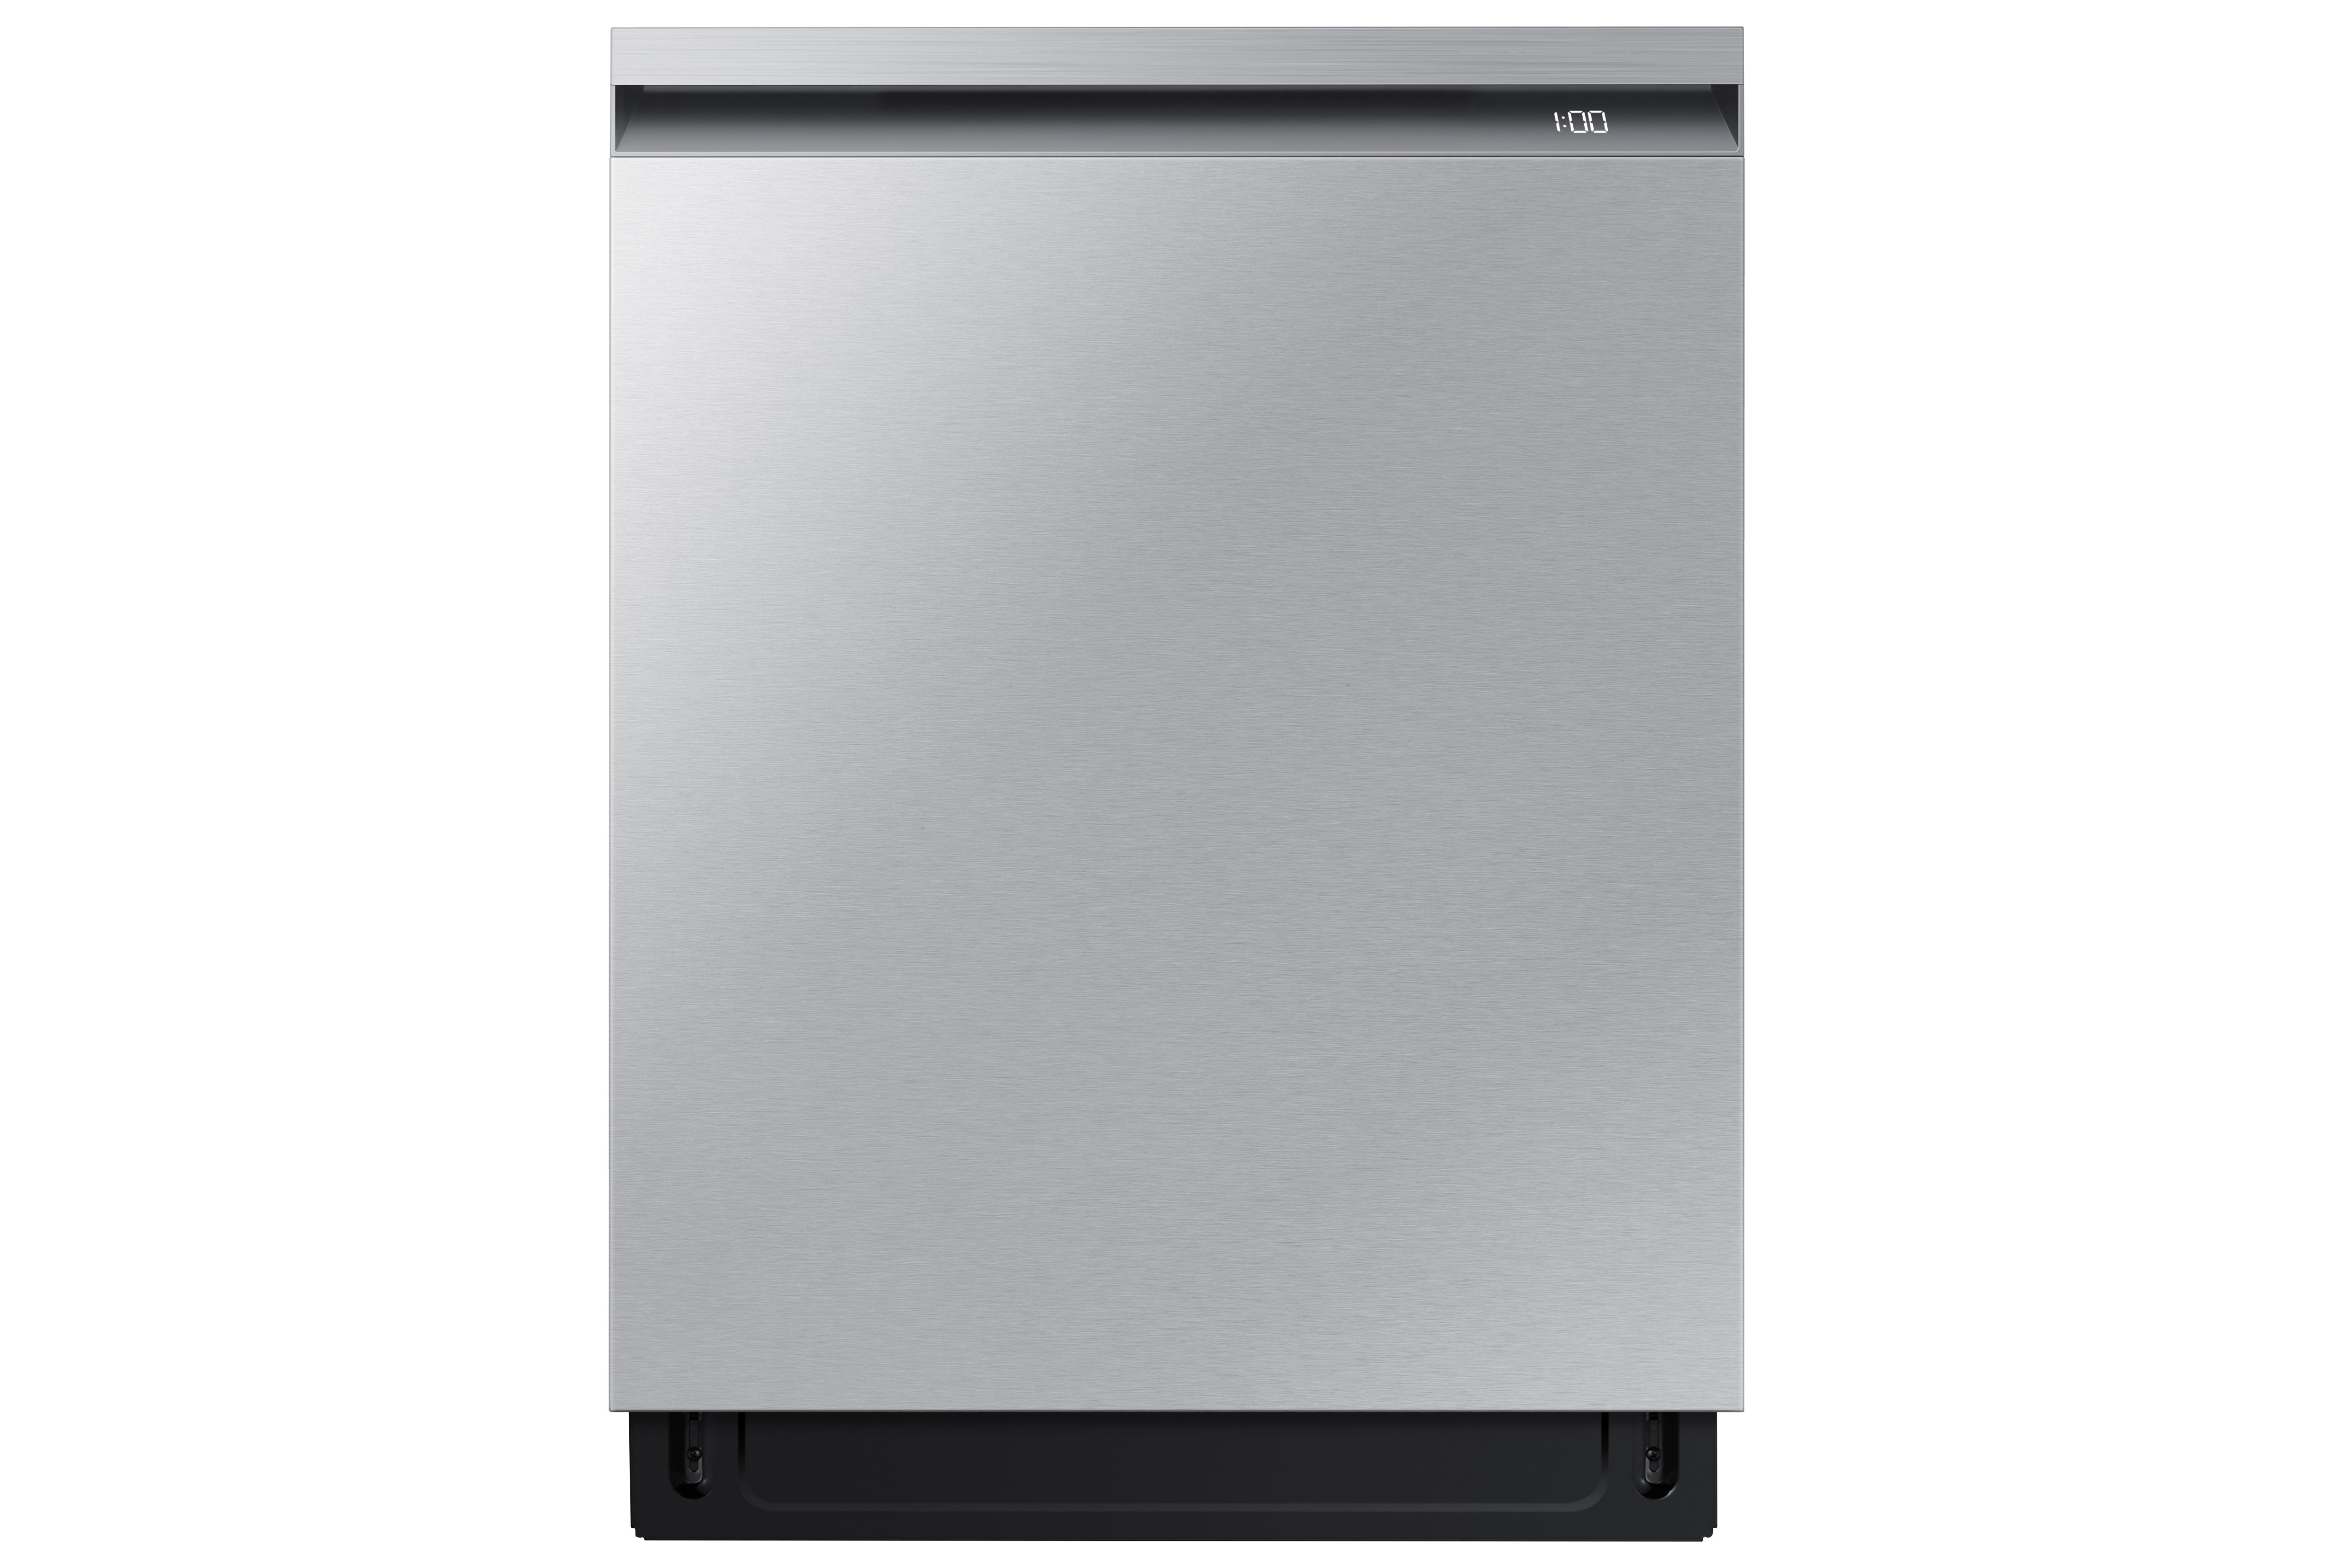 Samsung - Bespoke 42 dBA Built In Dishwasher in Stainless - DW80B7070US